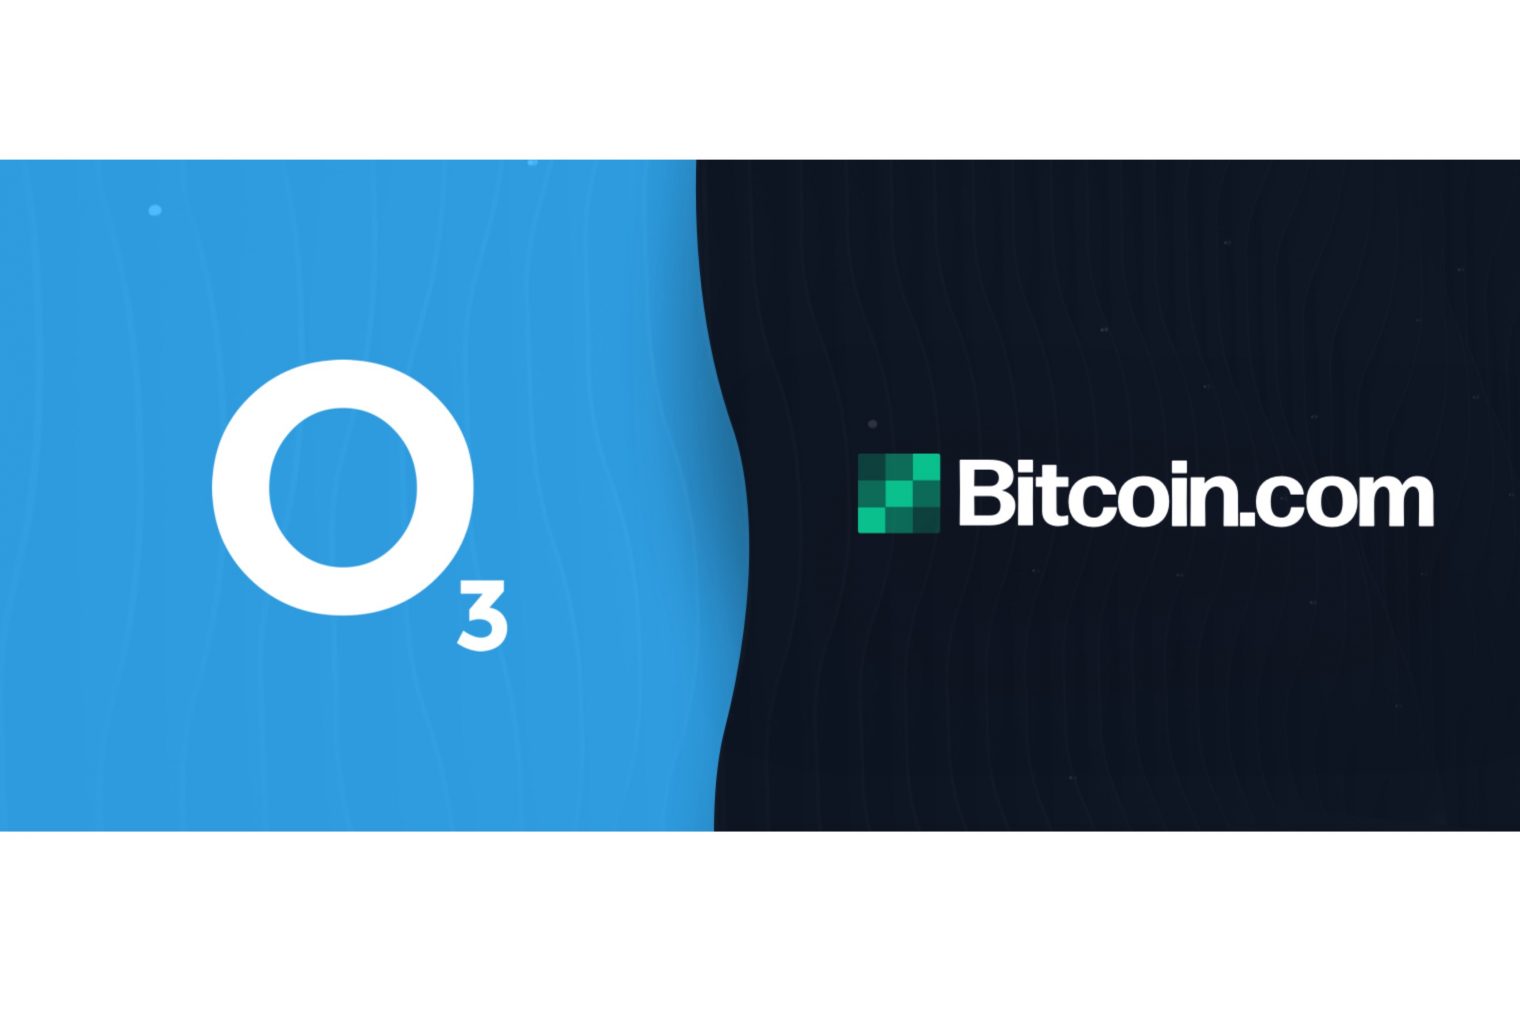  Bitcoin.com adquiere Blockchain Software Startup O3 Labs 